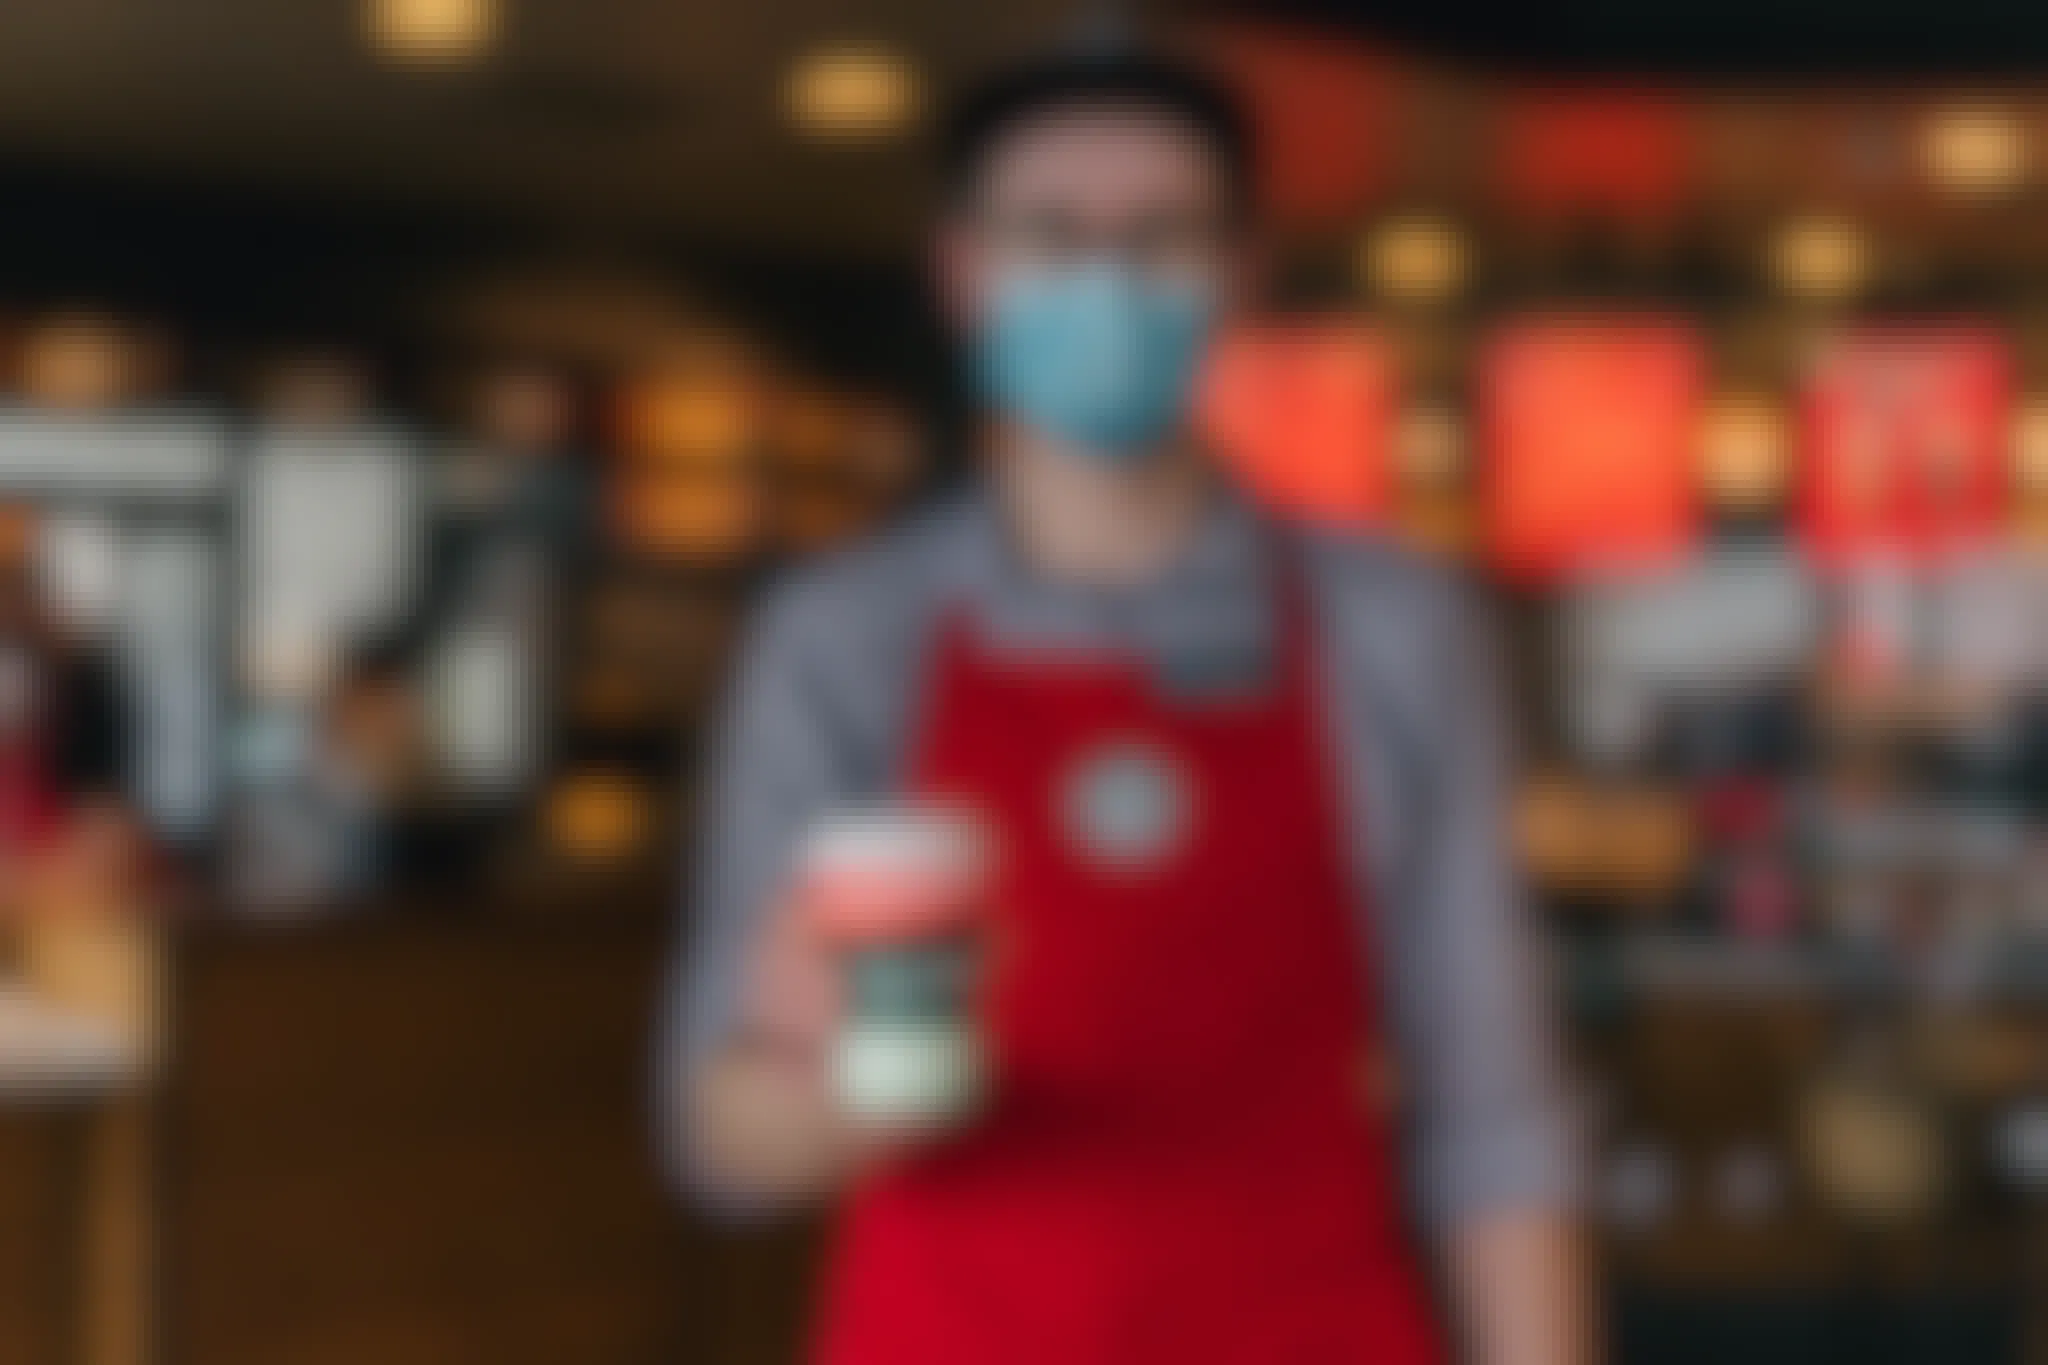 Free Starbucks in December for Frontline Workers